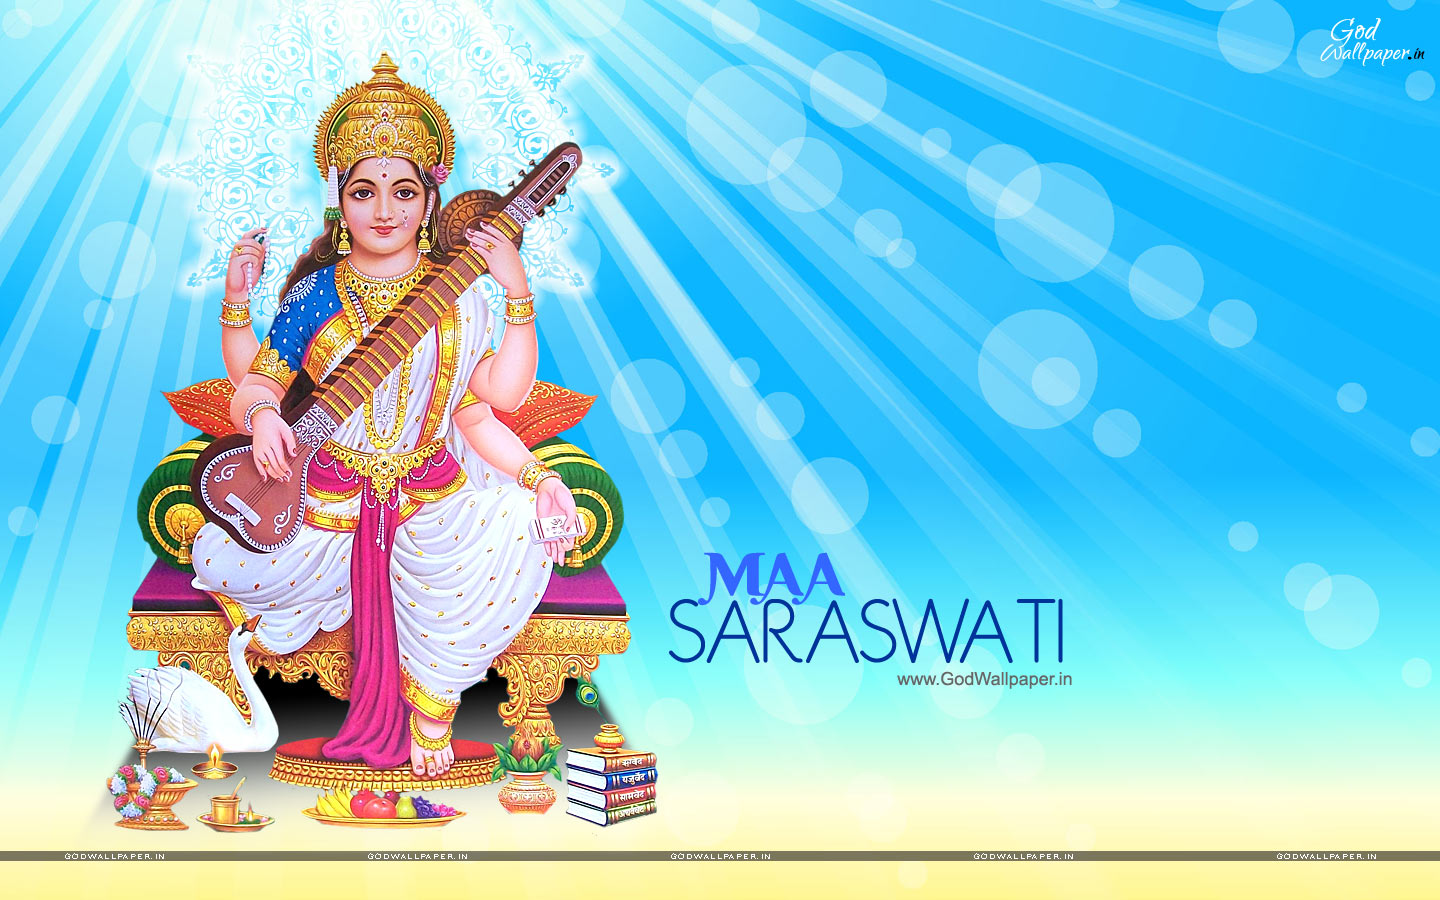 Saraswati devi images hd for mobile